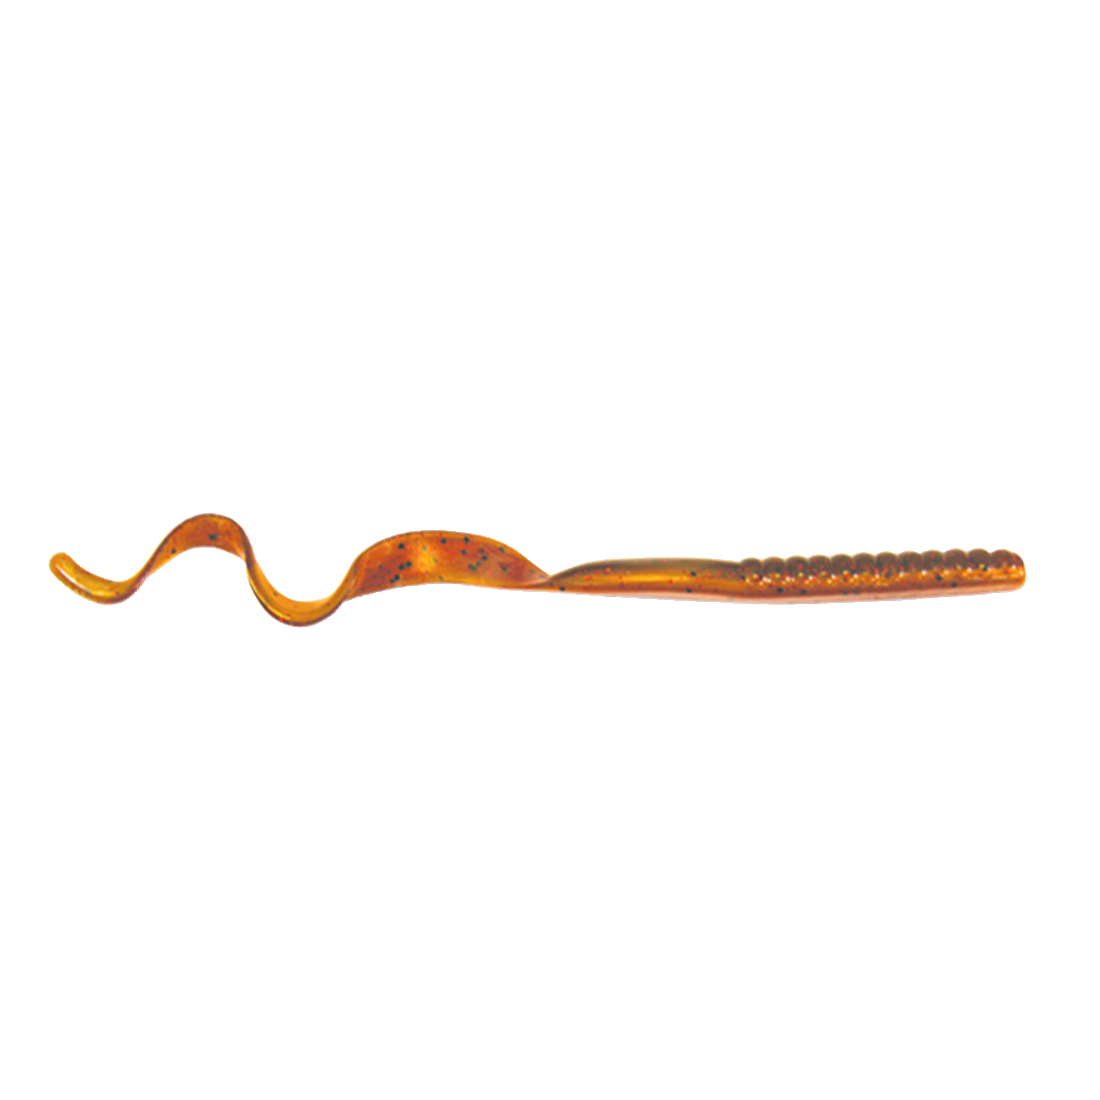 Culprit Worms C720-62 7.5 in. Original Worm, Ambrosia - Pack of 18